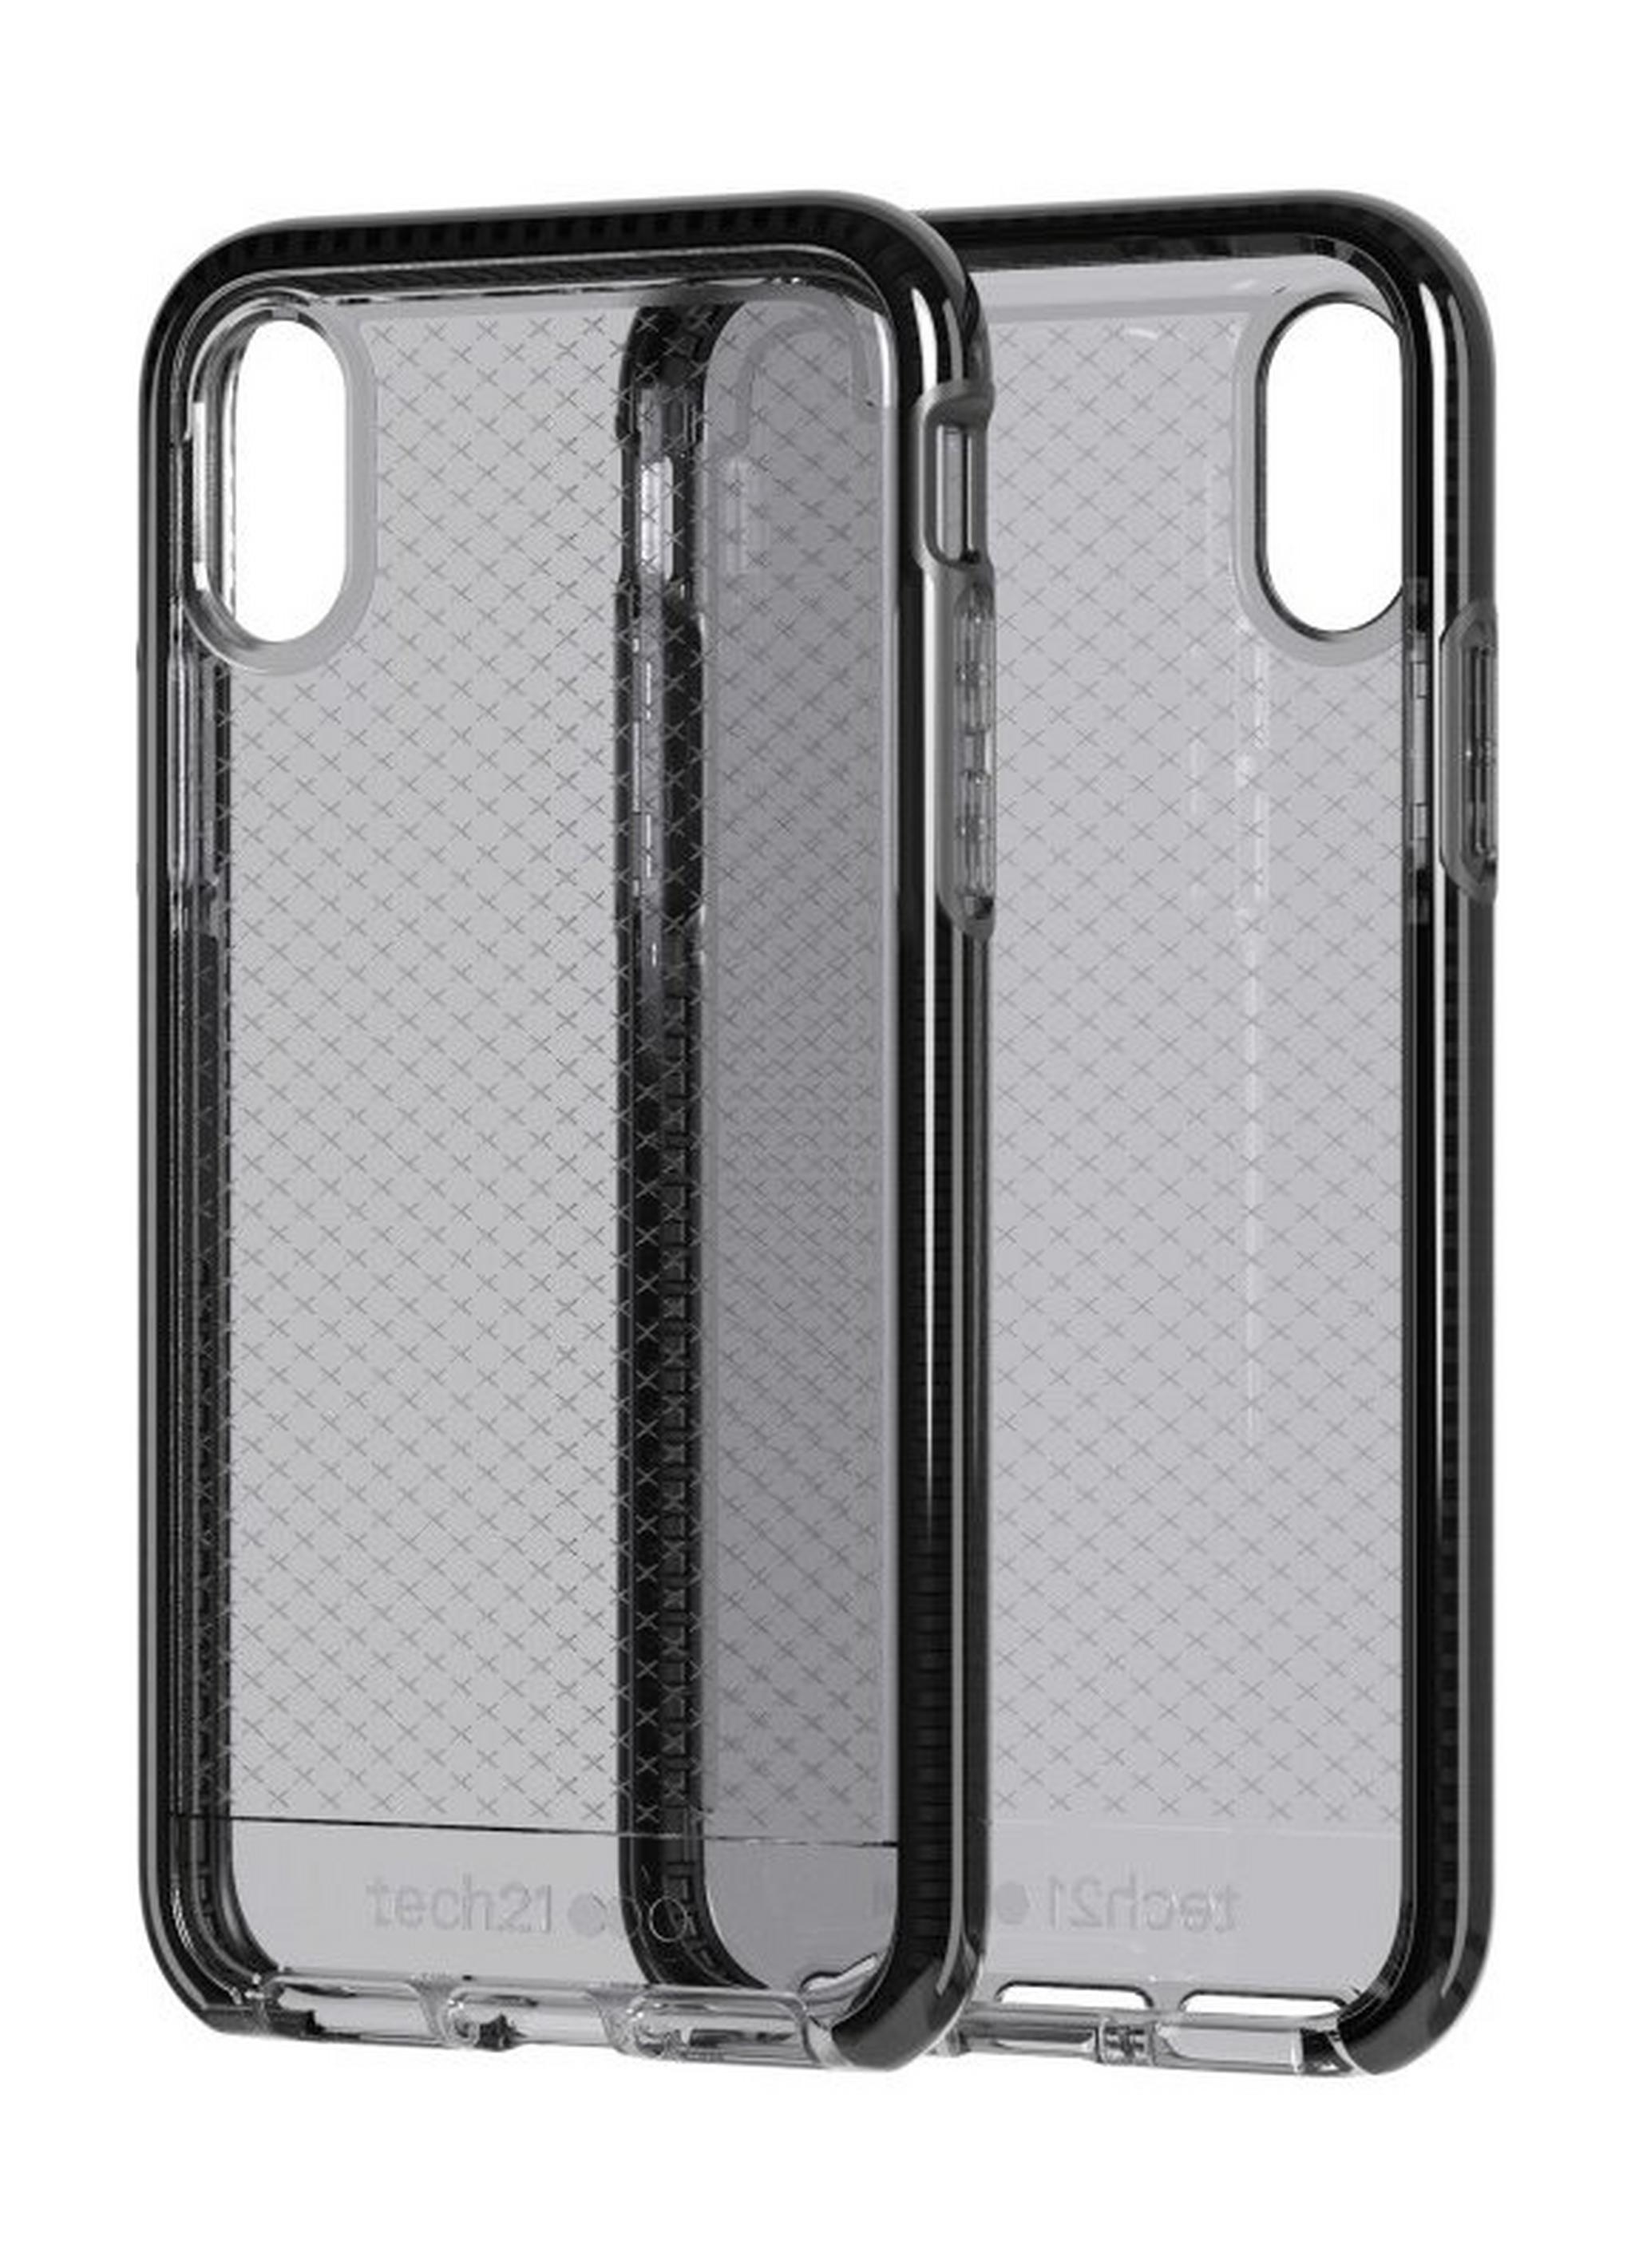 Tech21 Evo Check iPhone XS Case (T21-6169) - Black